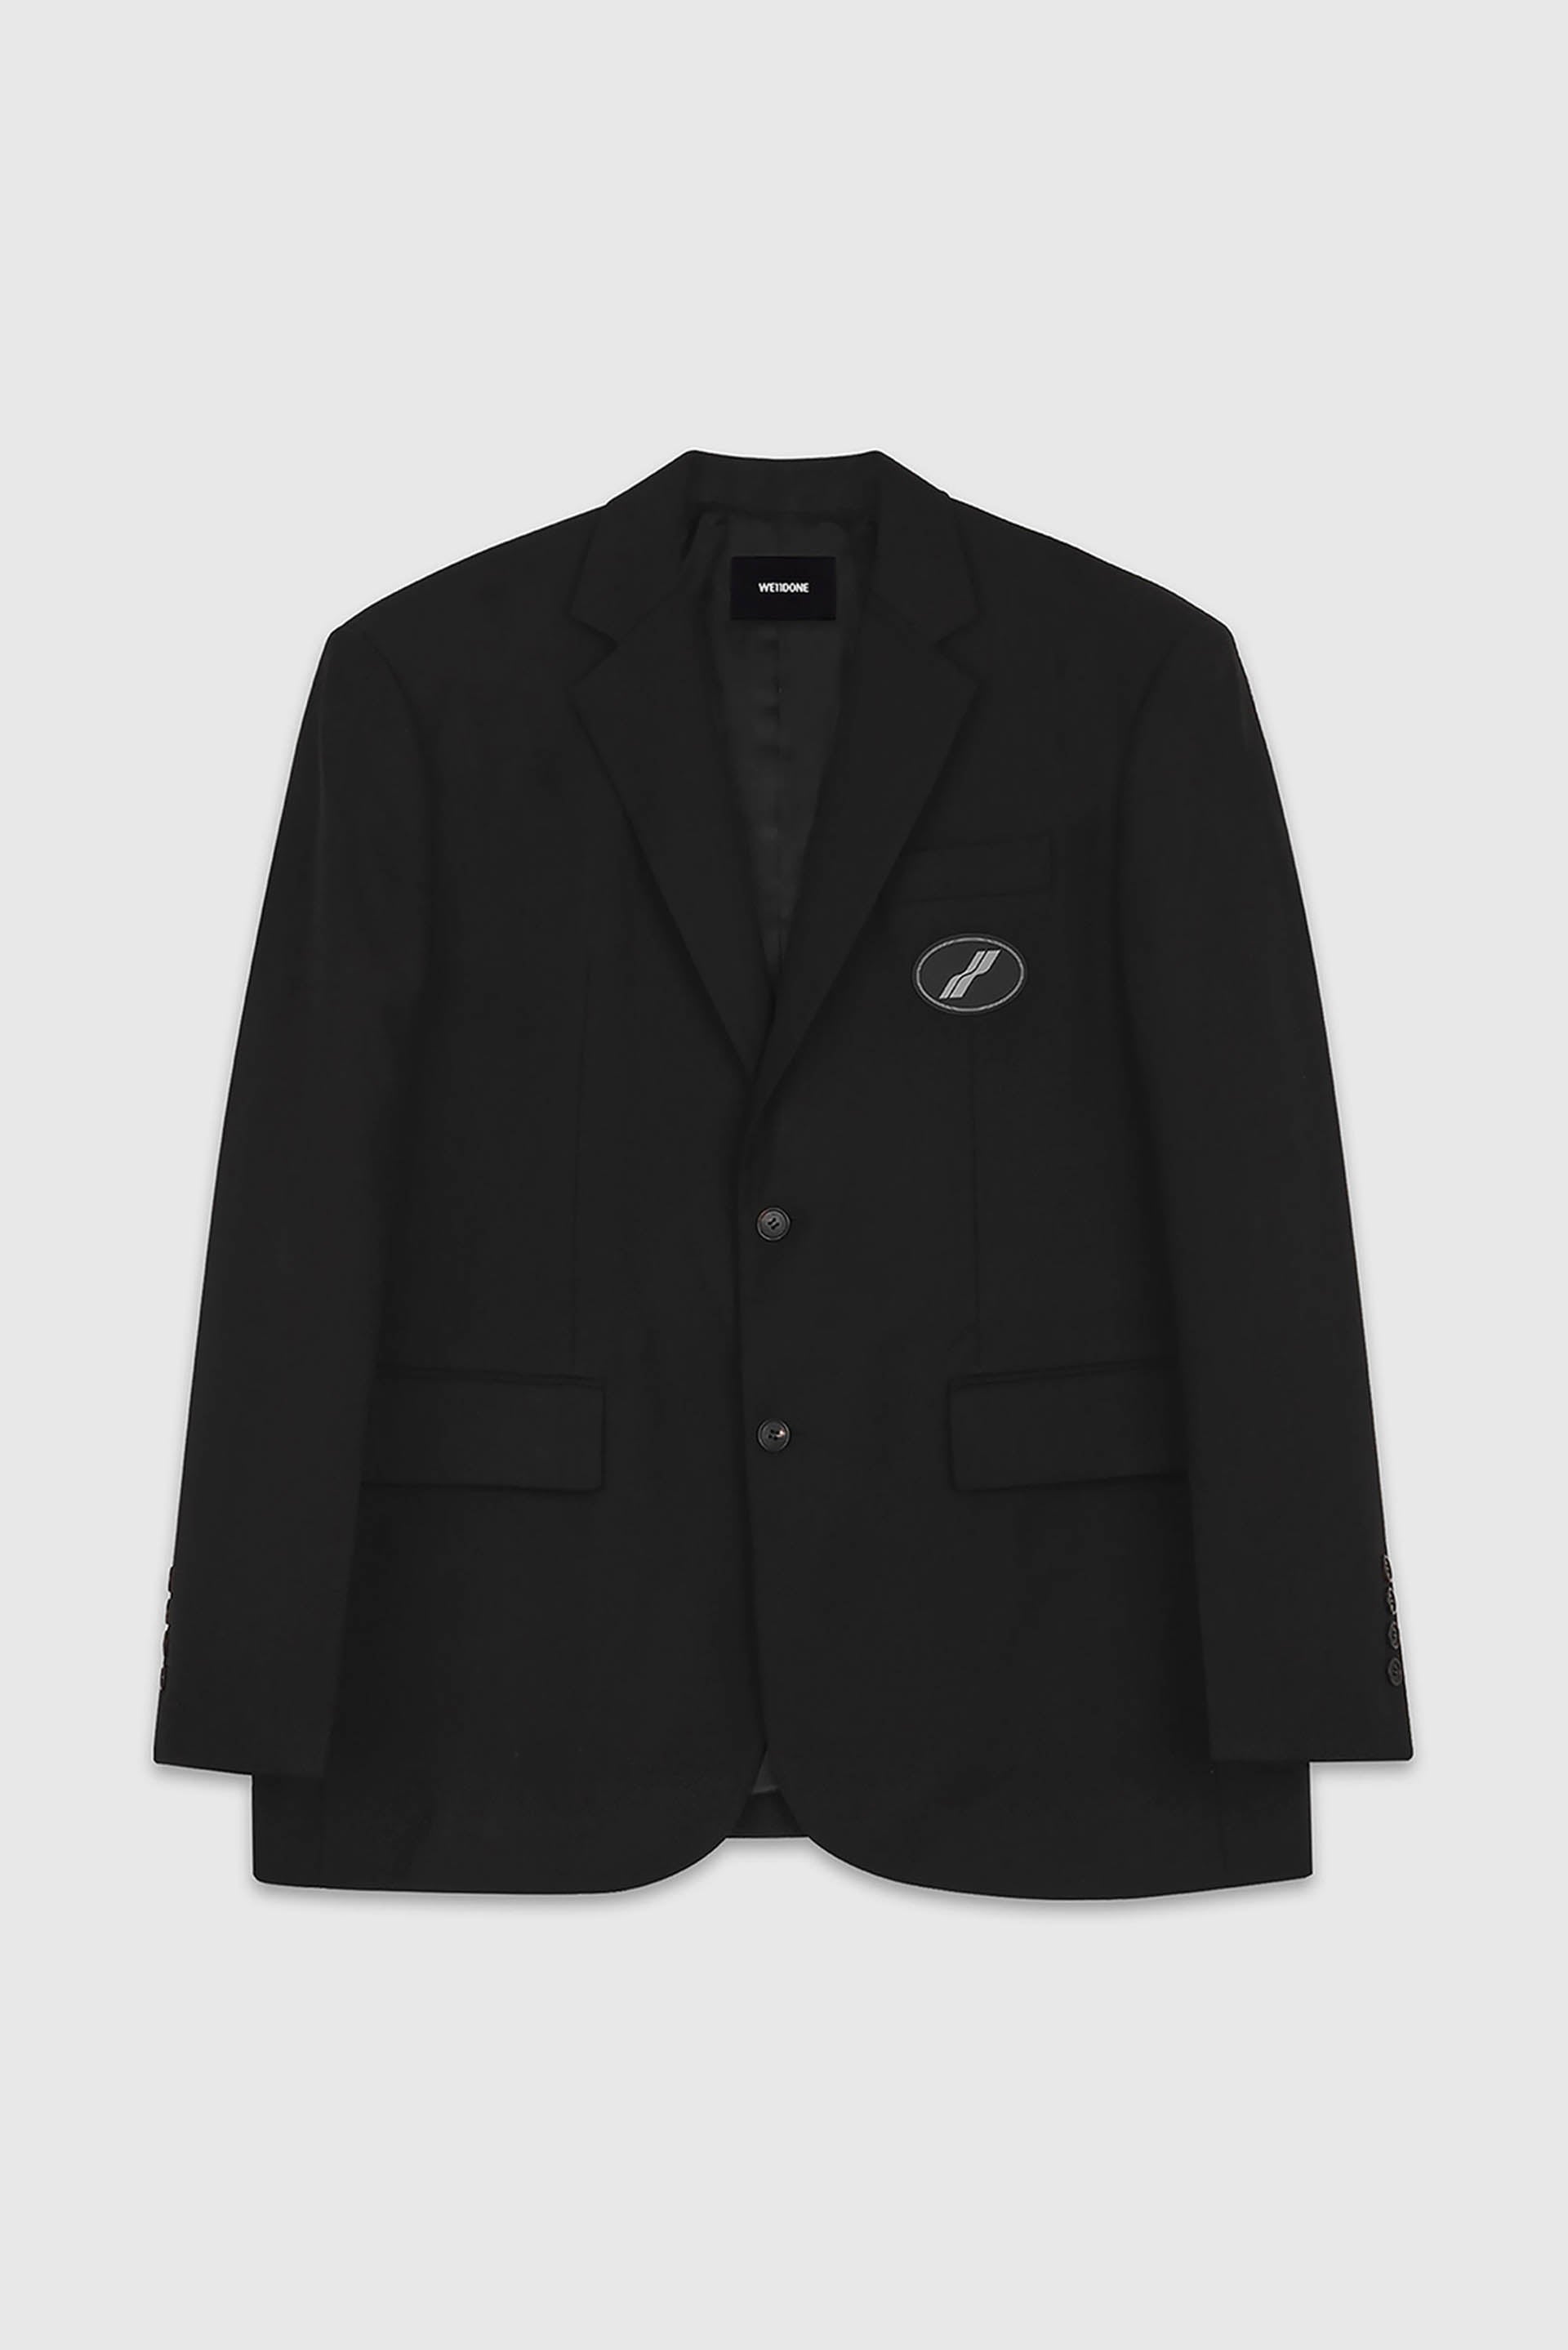 We11done Black Oversized Suit Logo Blazer | UJNG